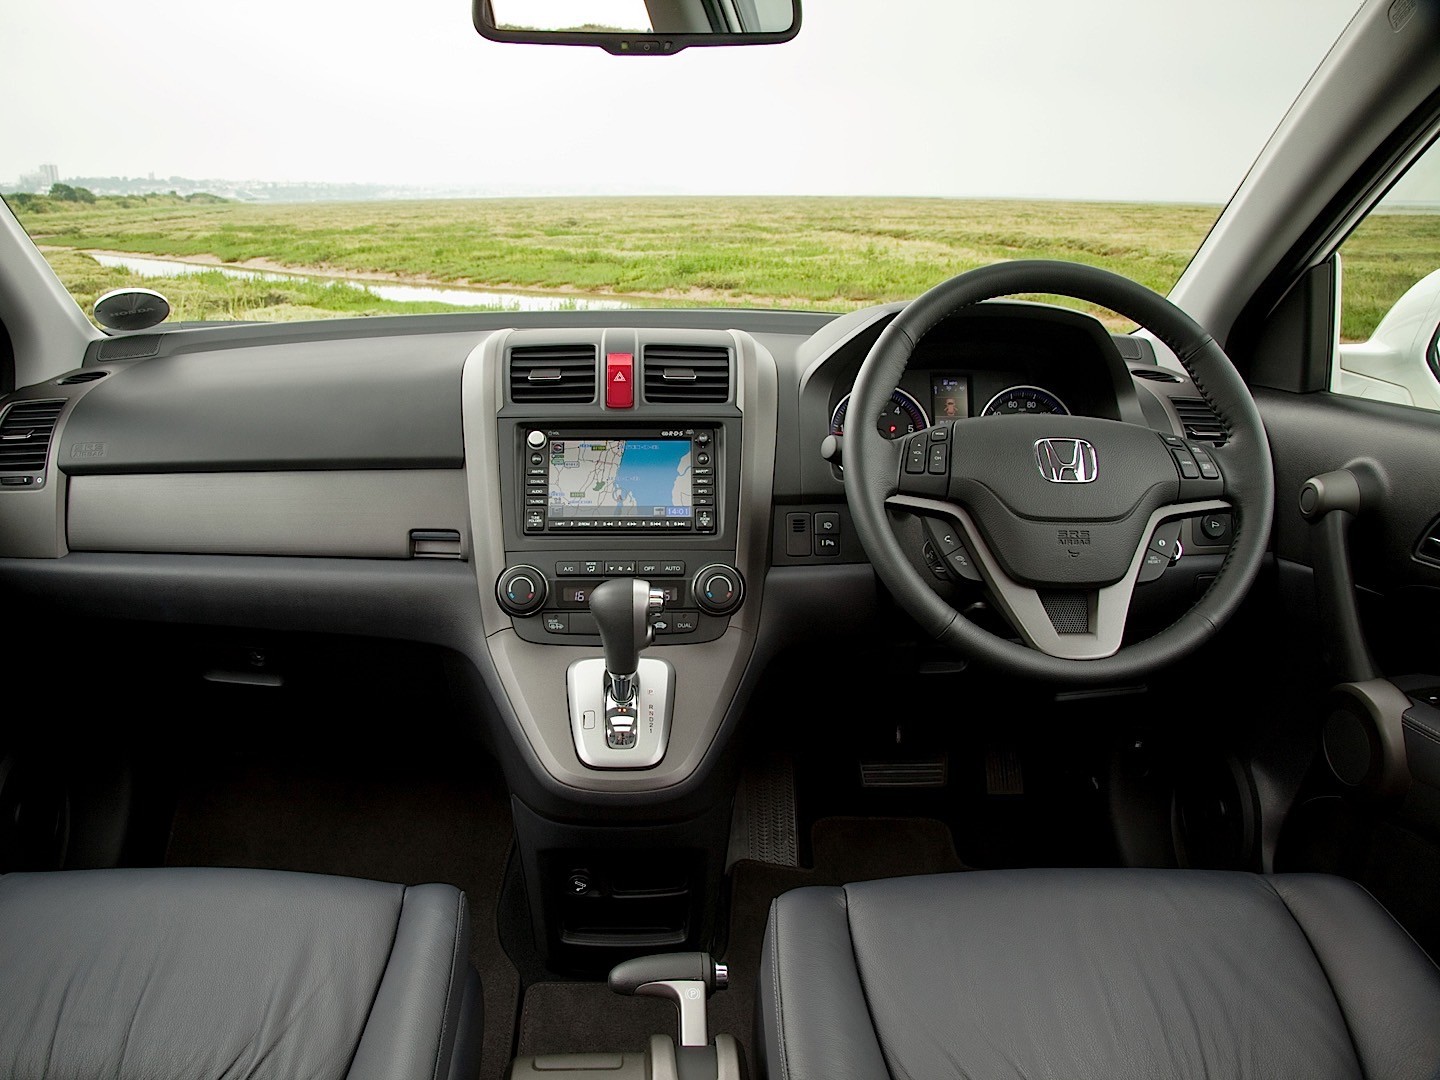 Interior Honda Crv 2010 Manual - Cars Trend Today